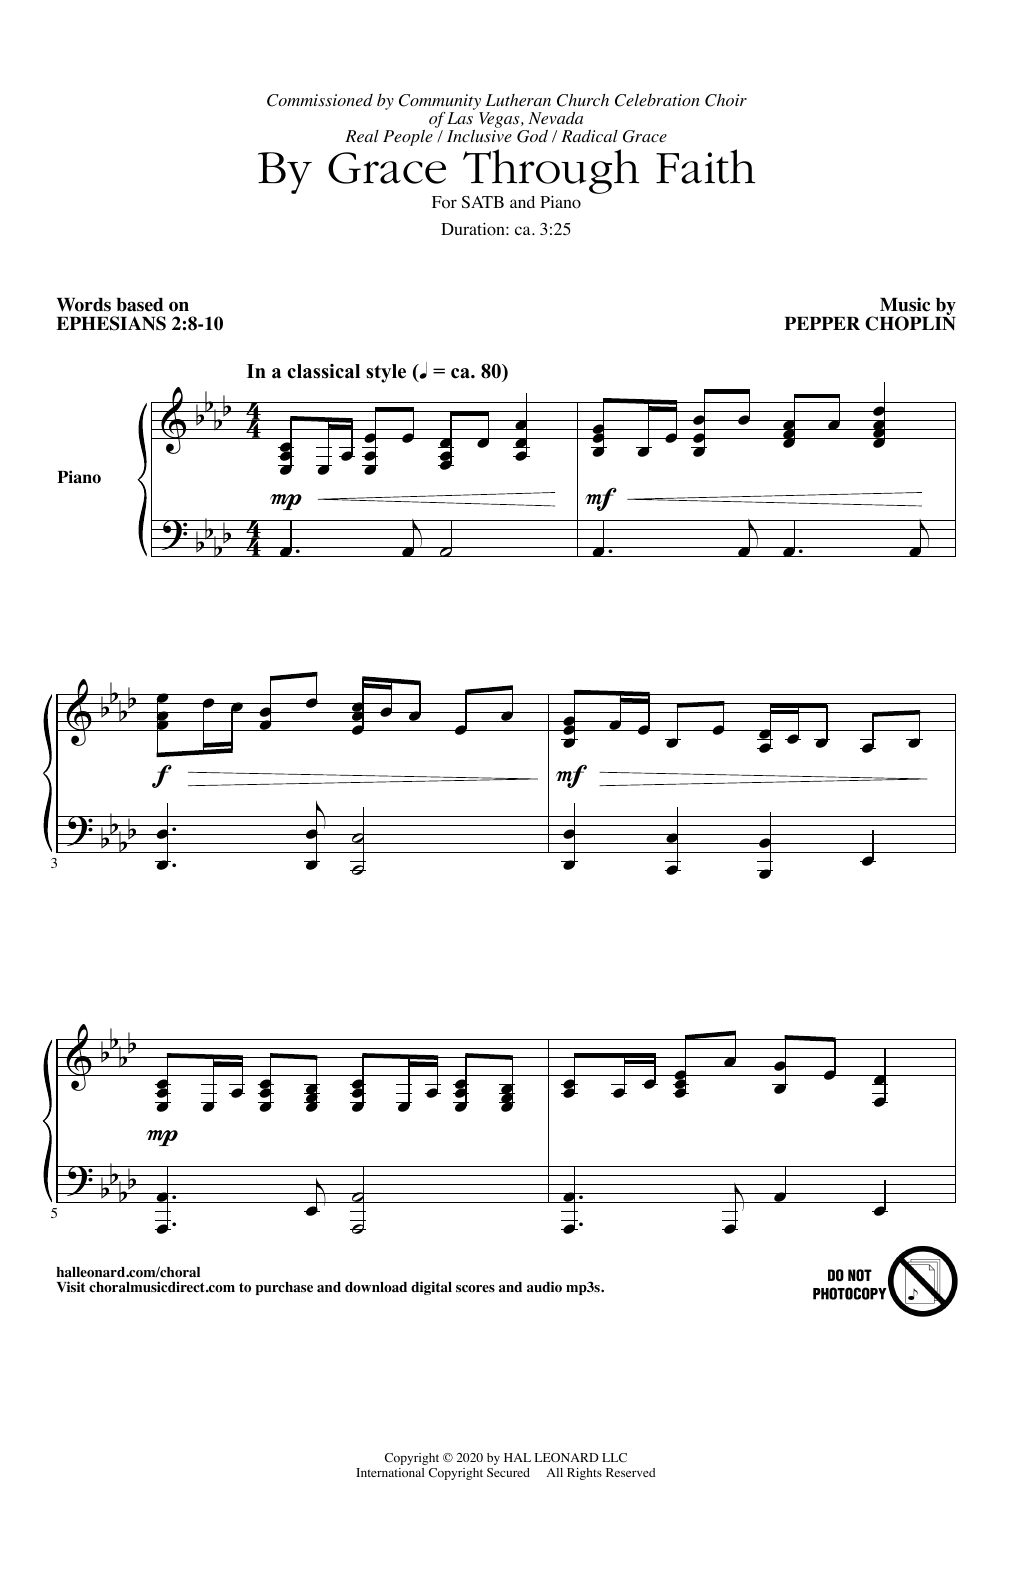 Download Pepper Choplin By Grace Through Faith Sheet Music and learn how to play SATB Choir PDF digital score in minutes